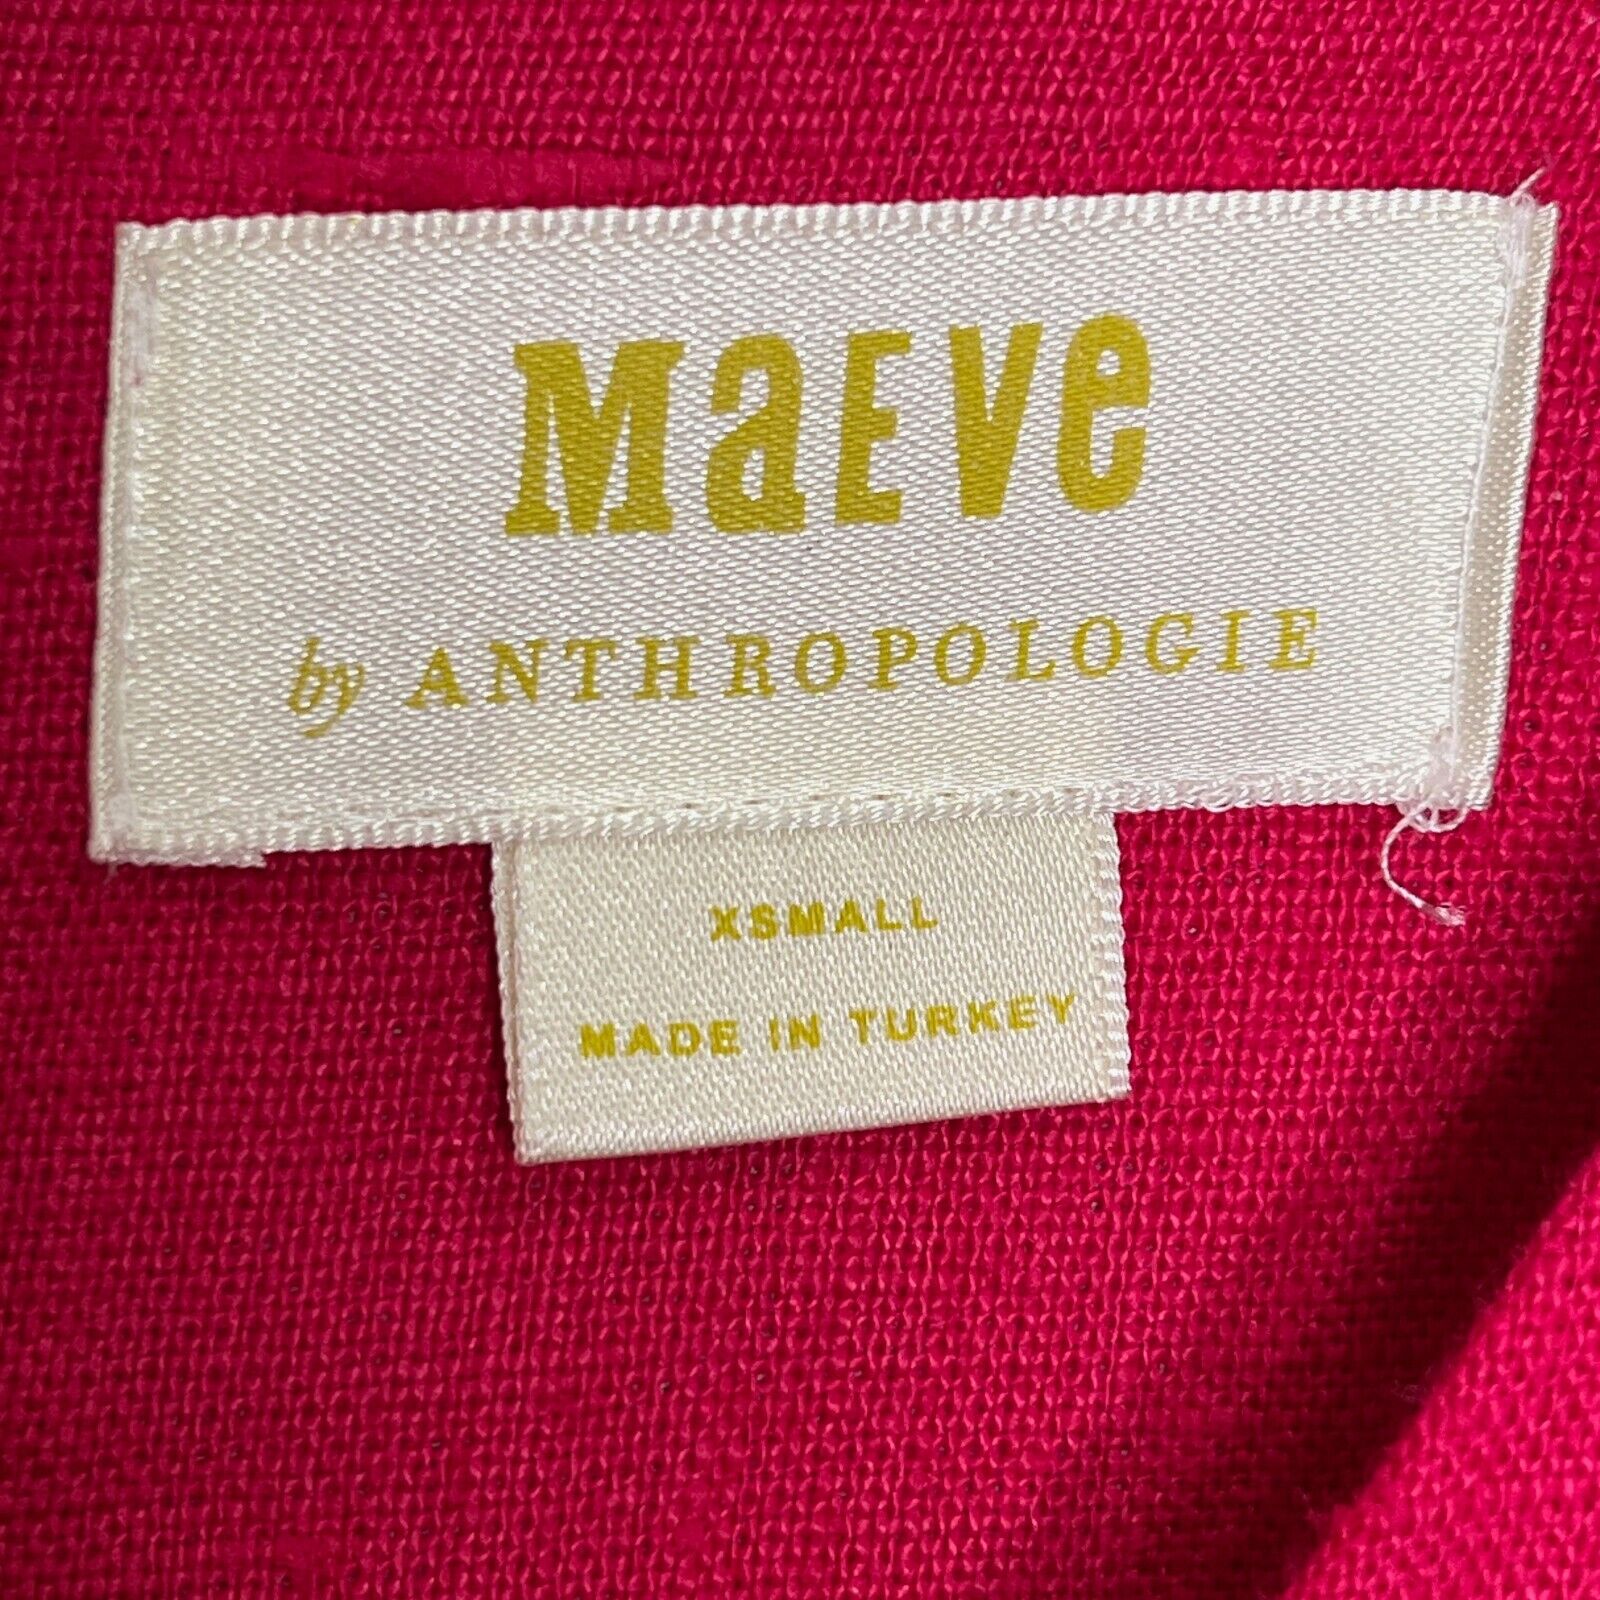 Anthropologie Maeve Melbourne Hot Pink Linen Swing Dress XS